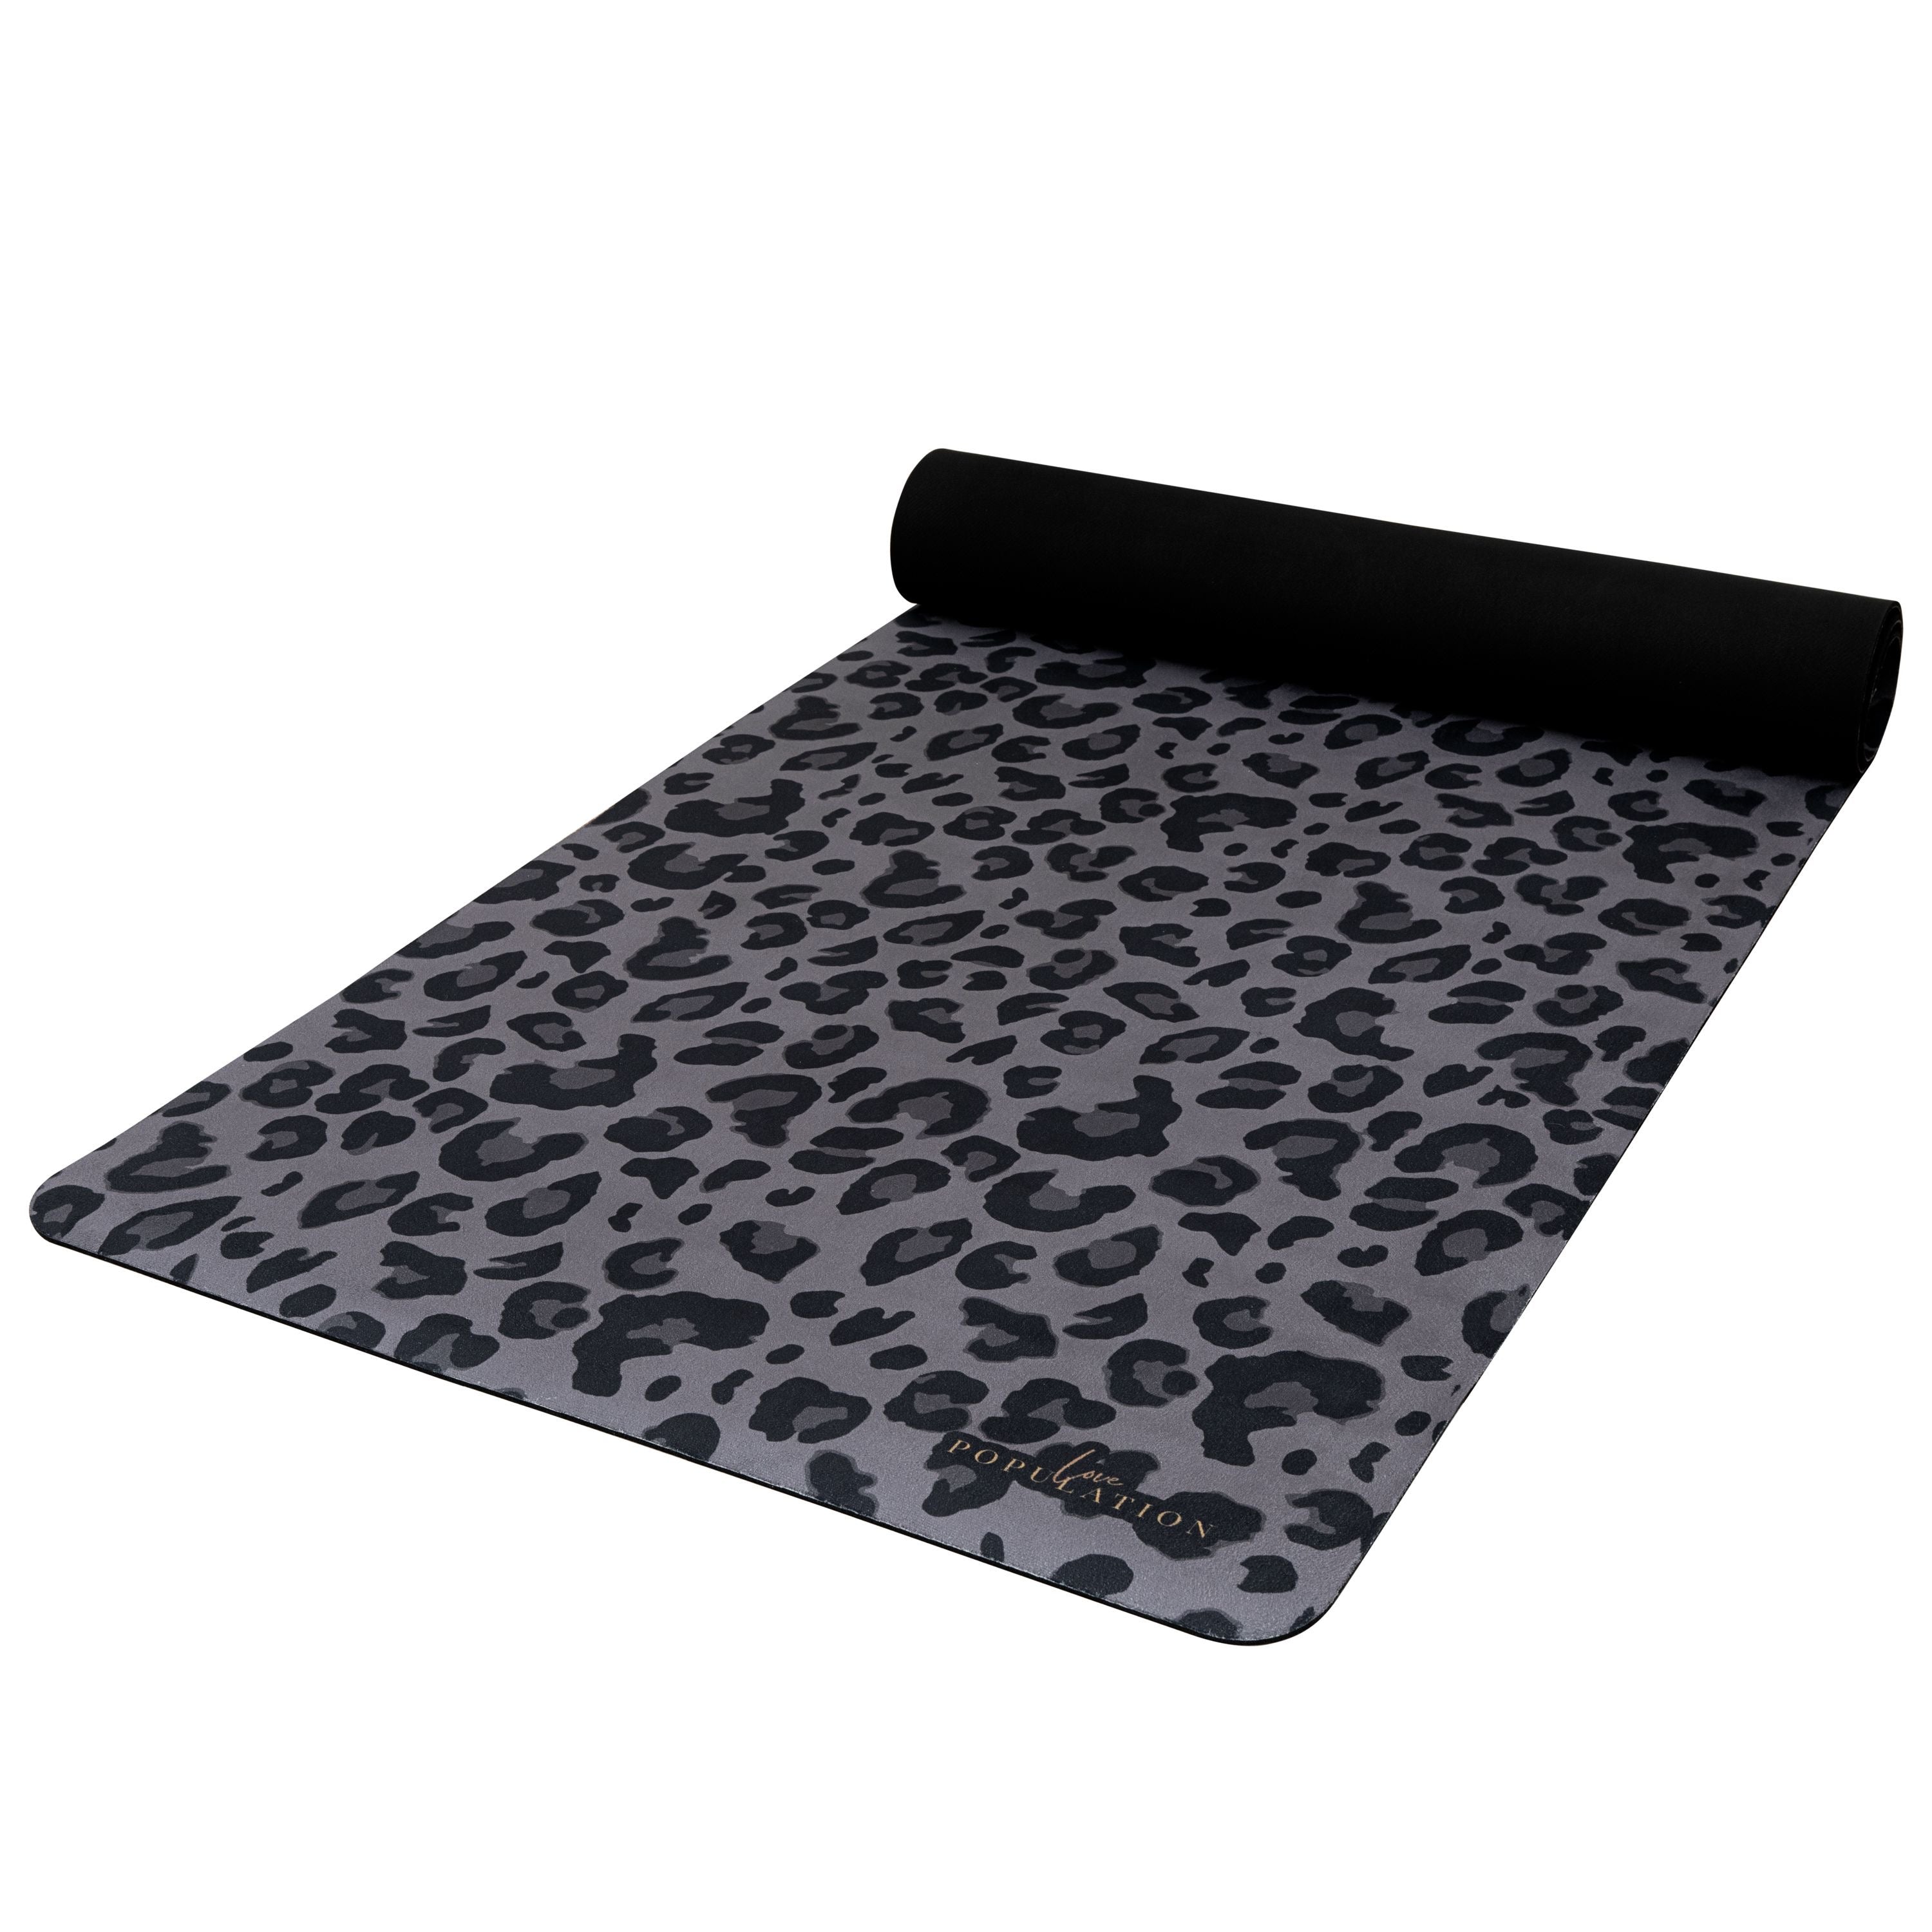 Stylish Yoga Mat With Exotic Print Gray Leopard